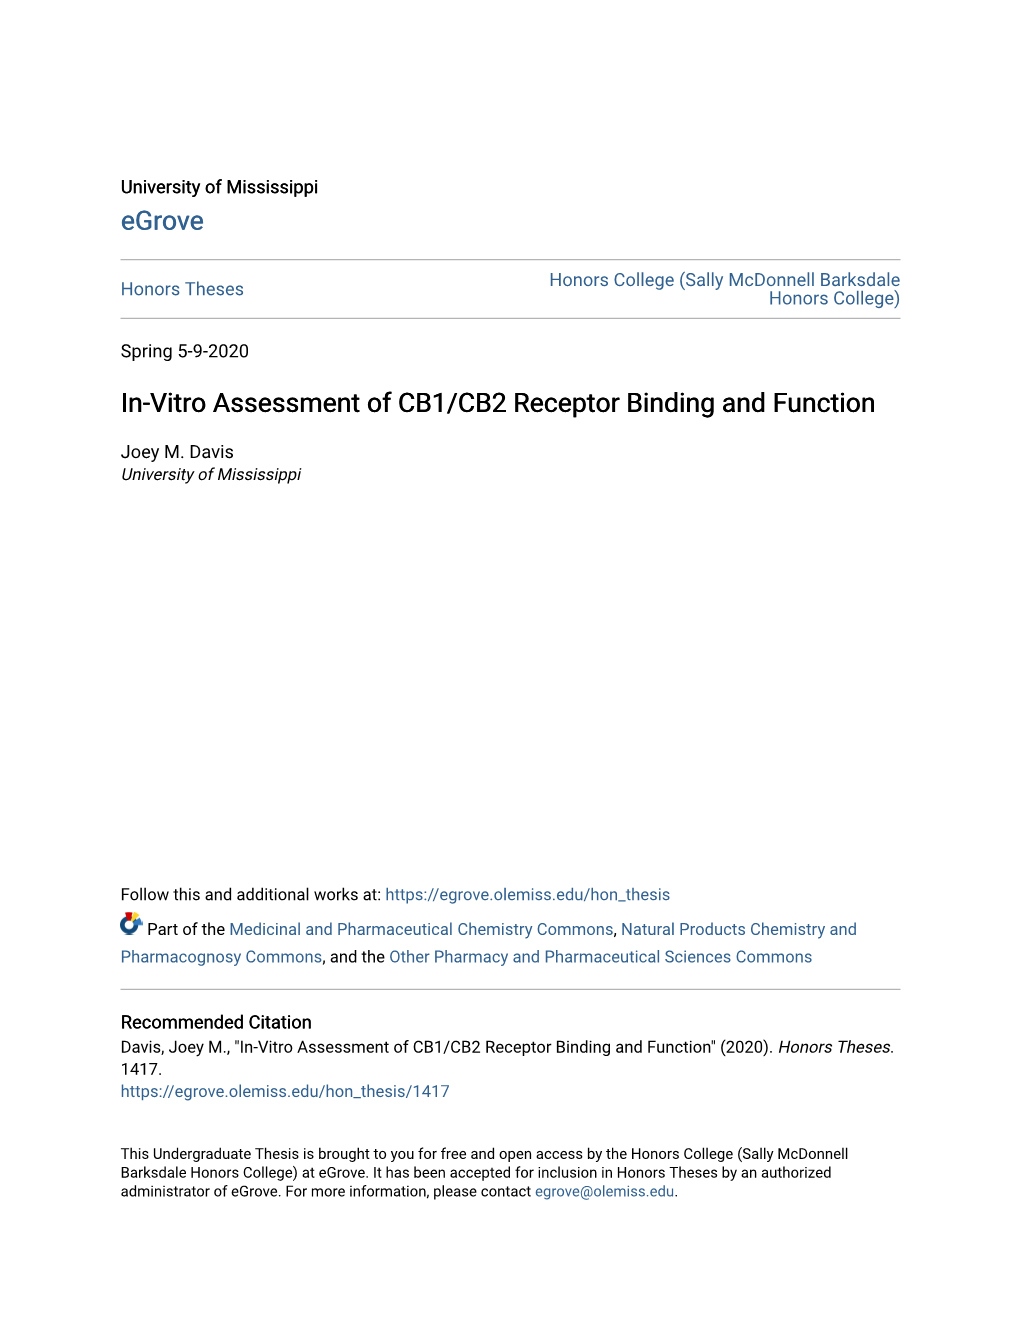 In-Vitro Assessment of CB1/CB2 Receptor Binding and Function